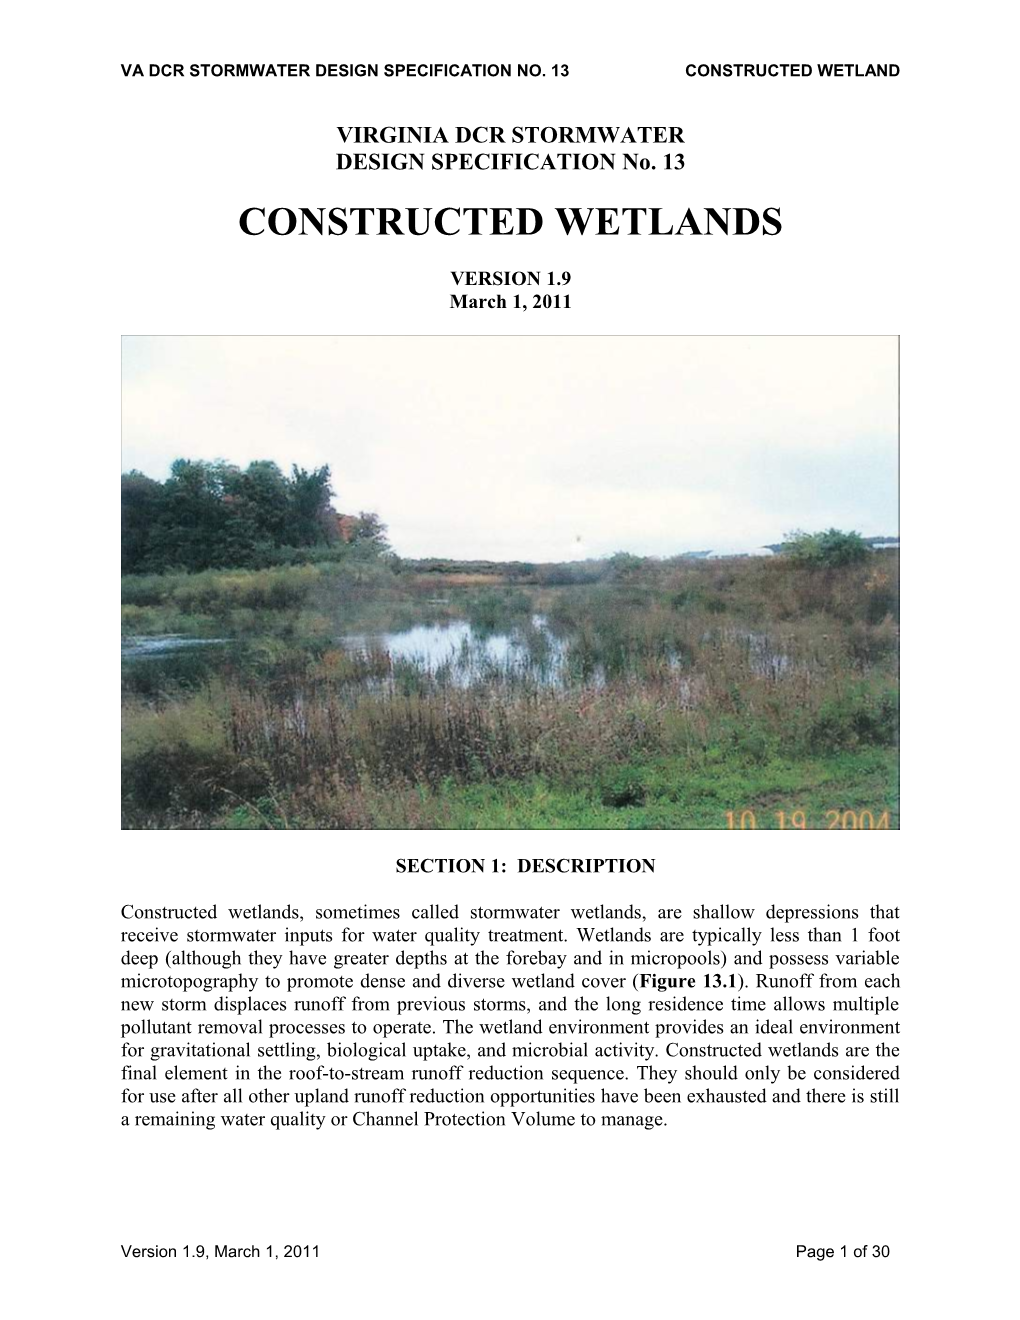 Va Dcr Stormwater Design Specification No. 13 Constructed Wetland